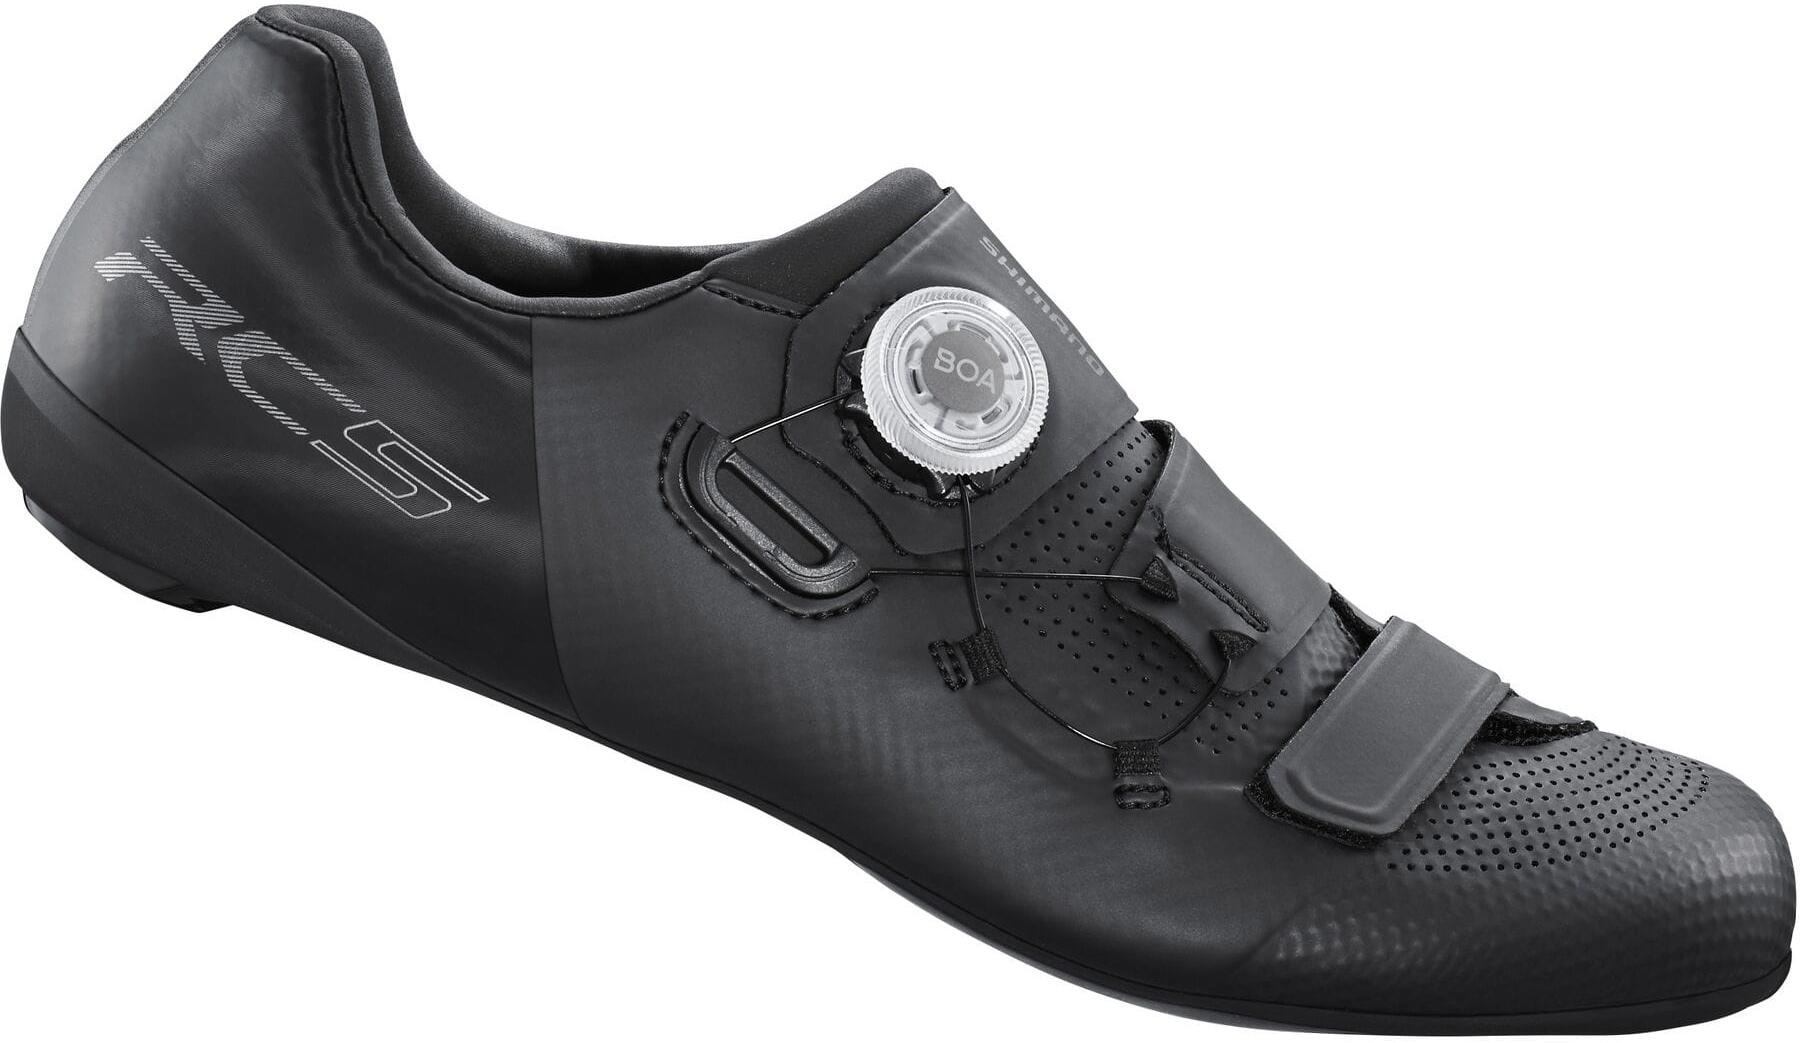 Shimano Rc5 Road Shoes - Black